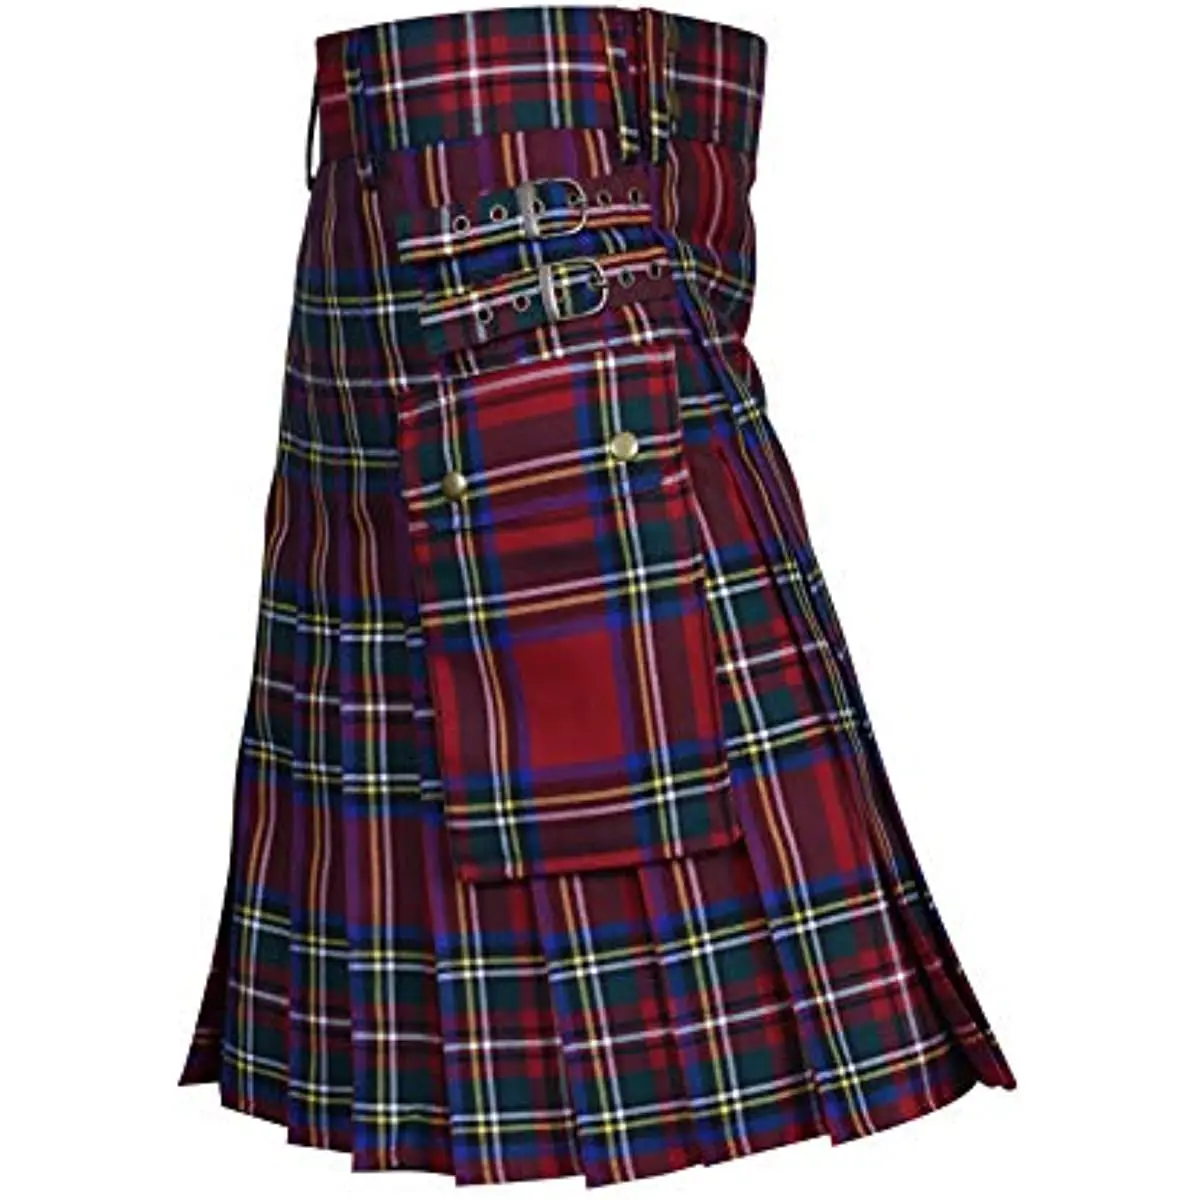 CLOUD KILT" Kilt for Men Tartan Poly Viscose Premium Quality Scottish Utility Kilt Traditional Highland Men's Kilt